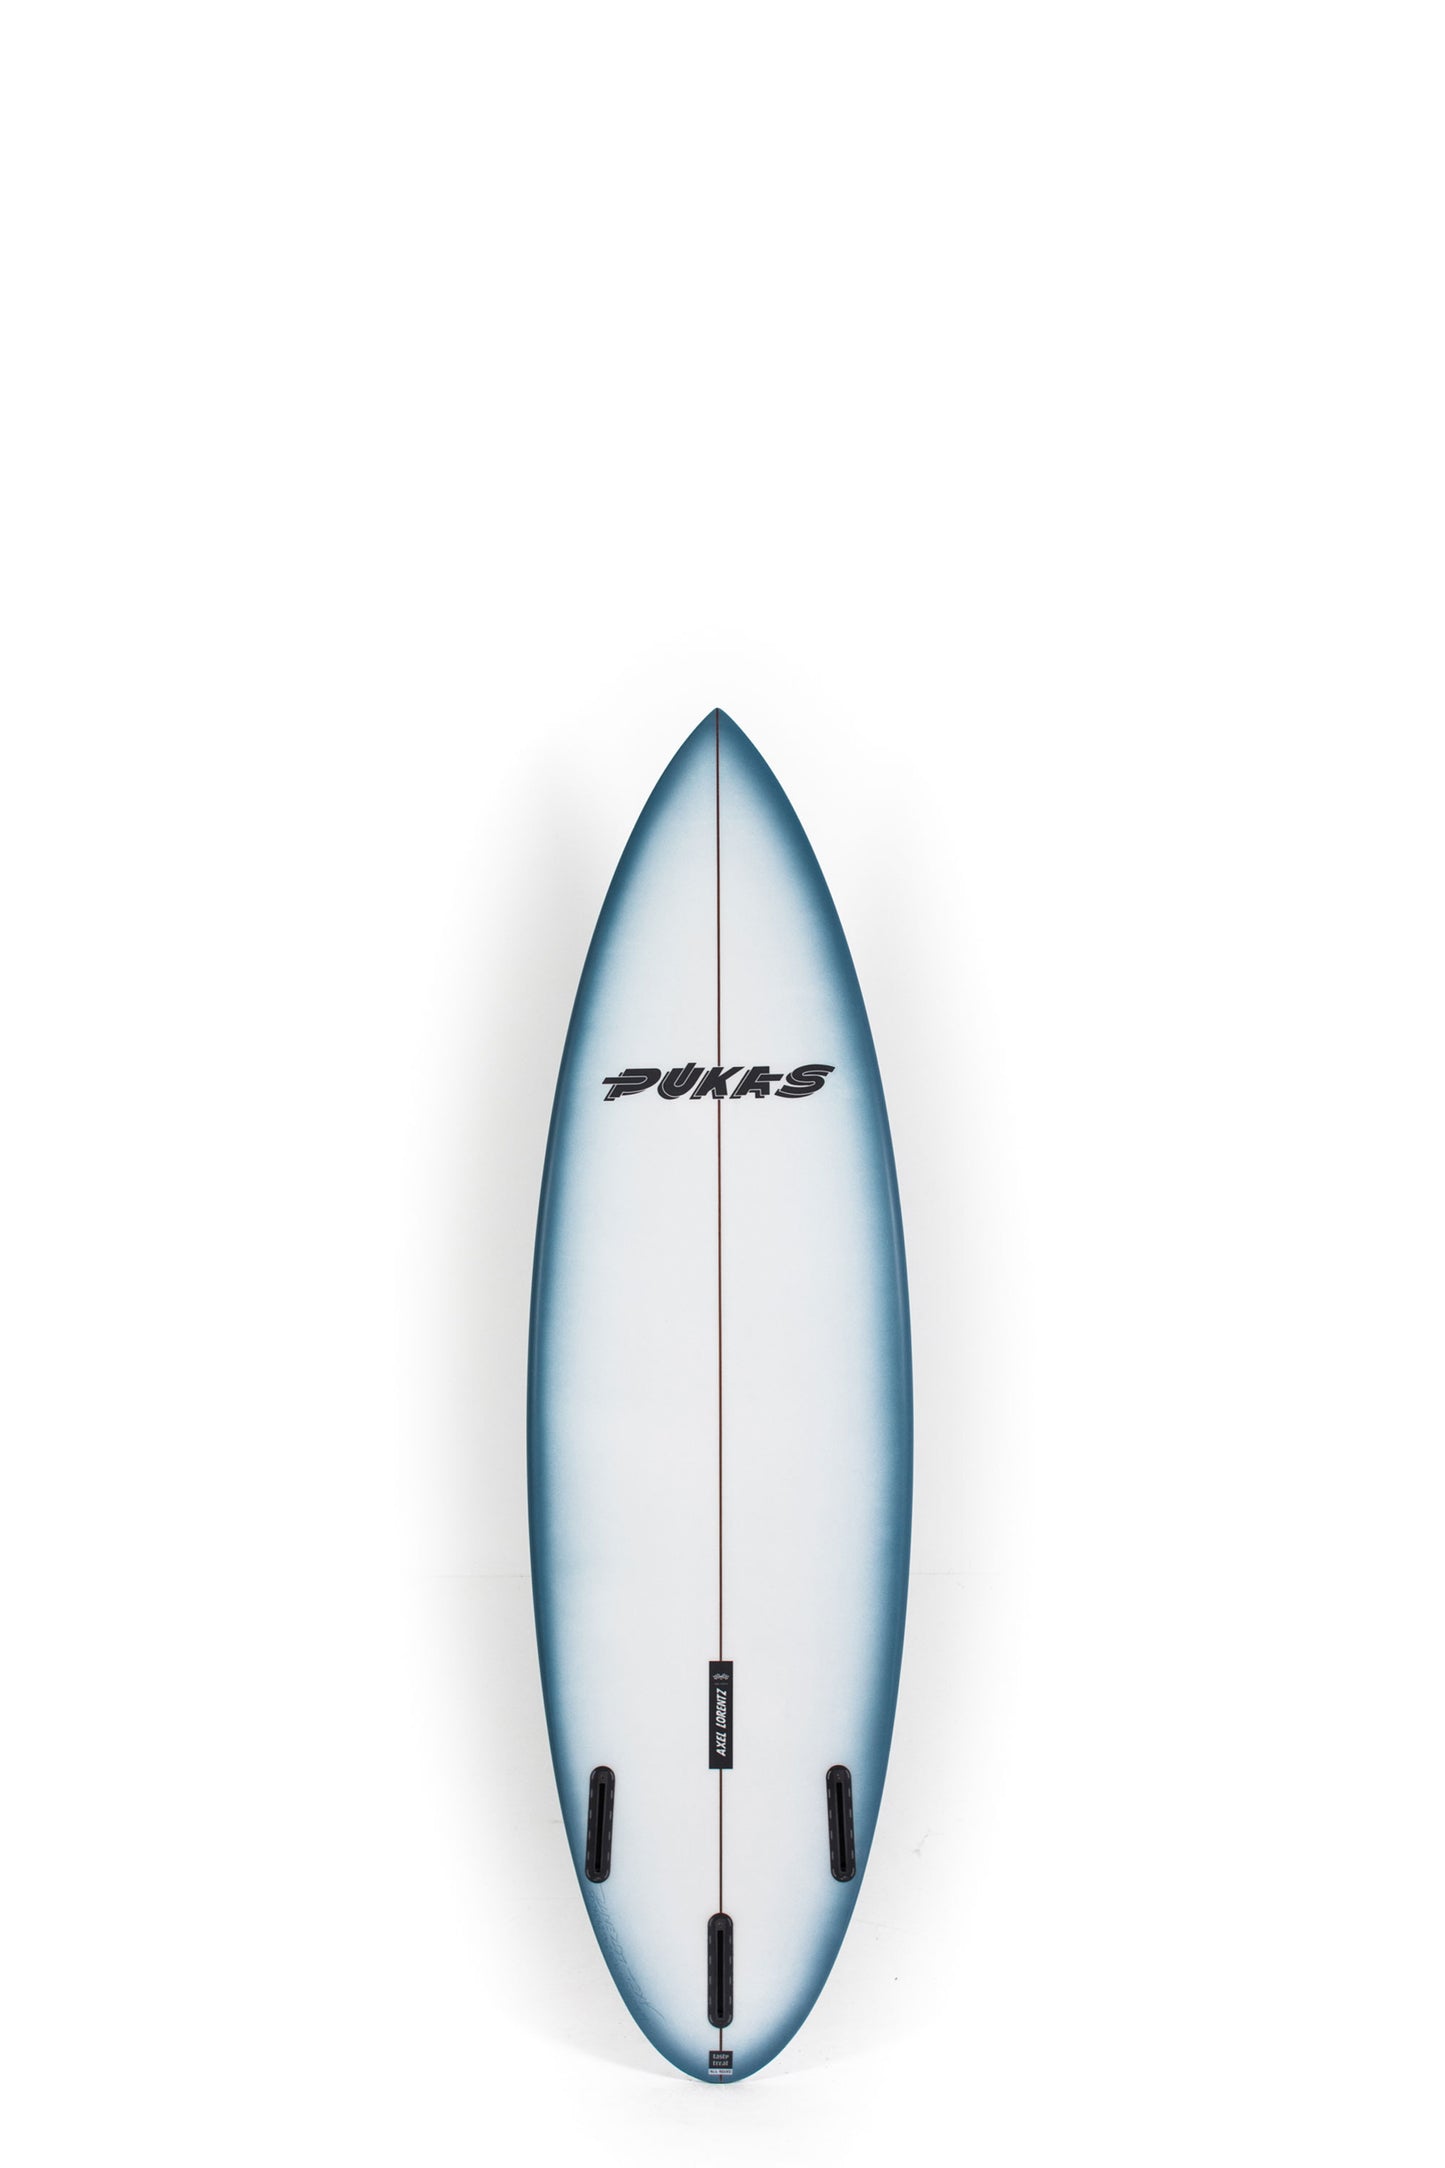 Pukas-Surf-Shop-Pukas-Surfboards-Ttar-Axel-Lorentz-5_10_